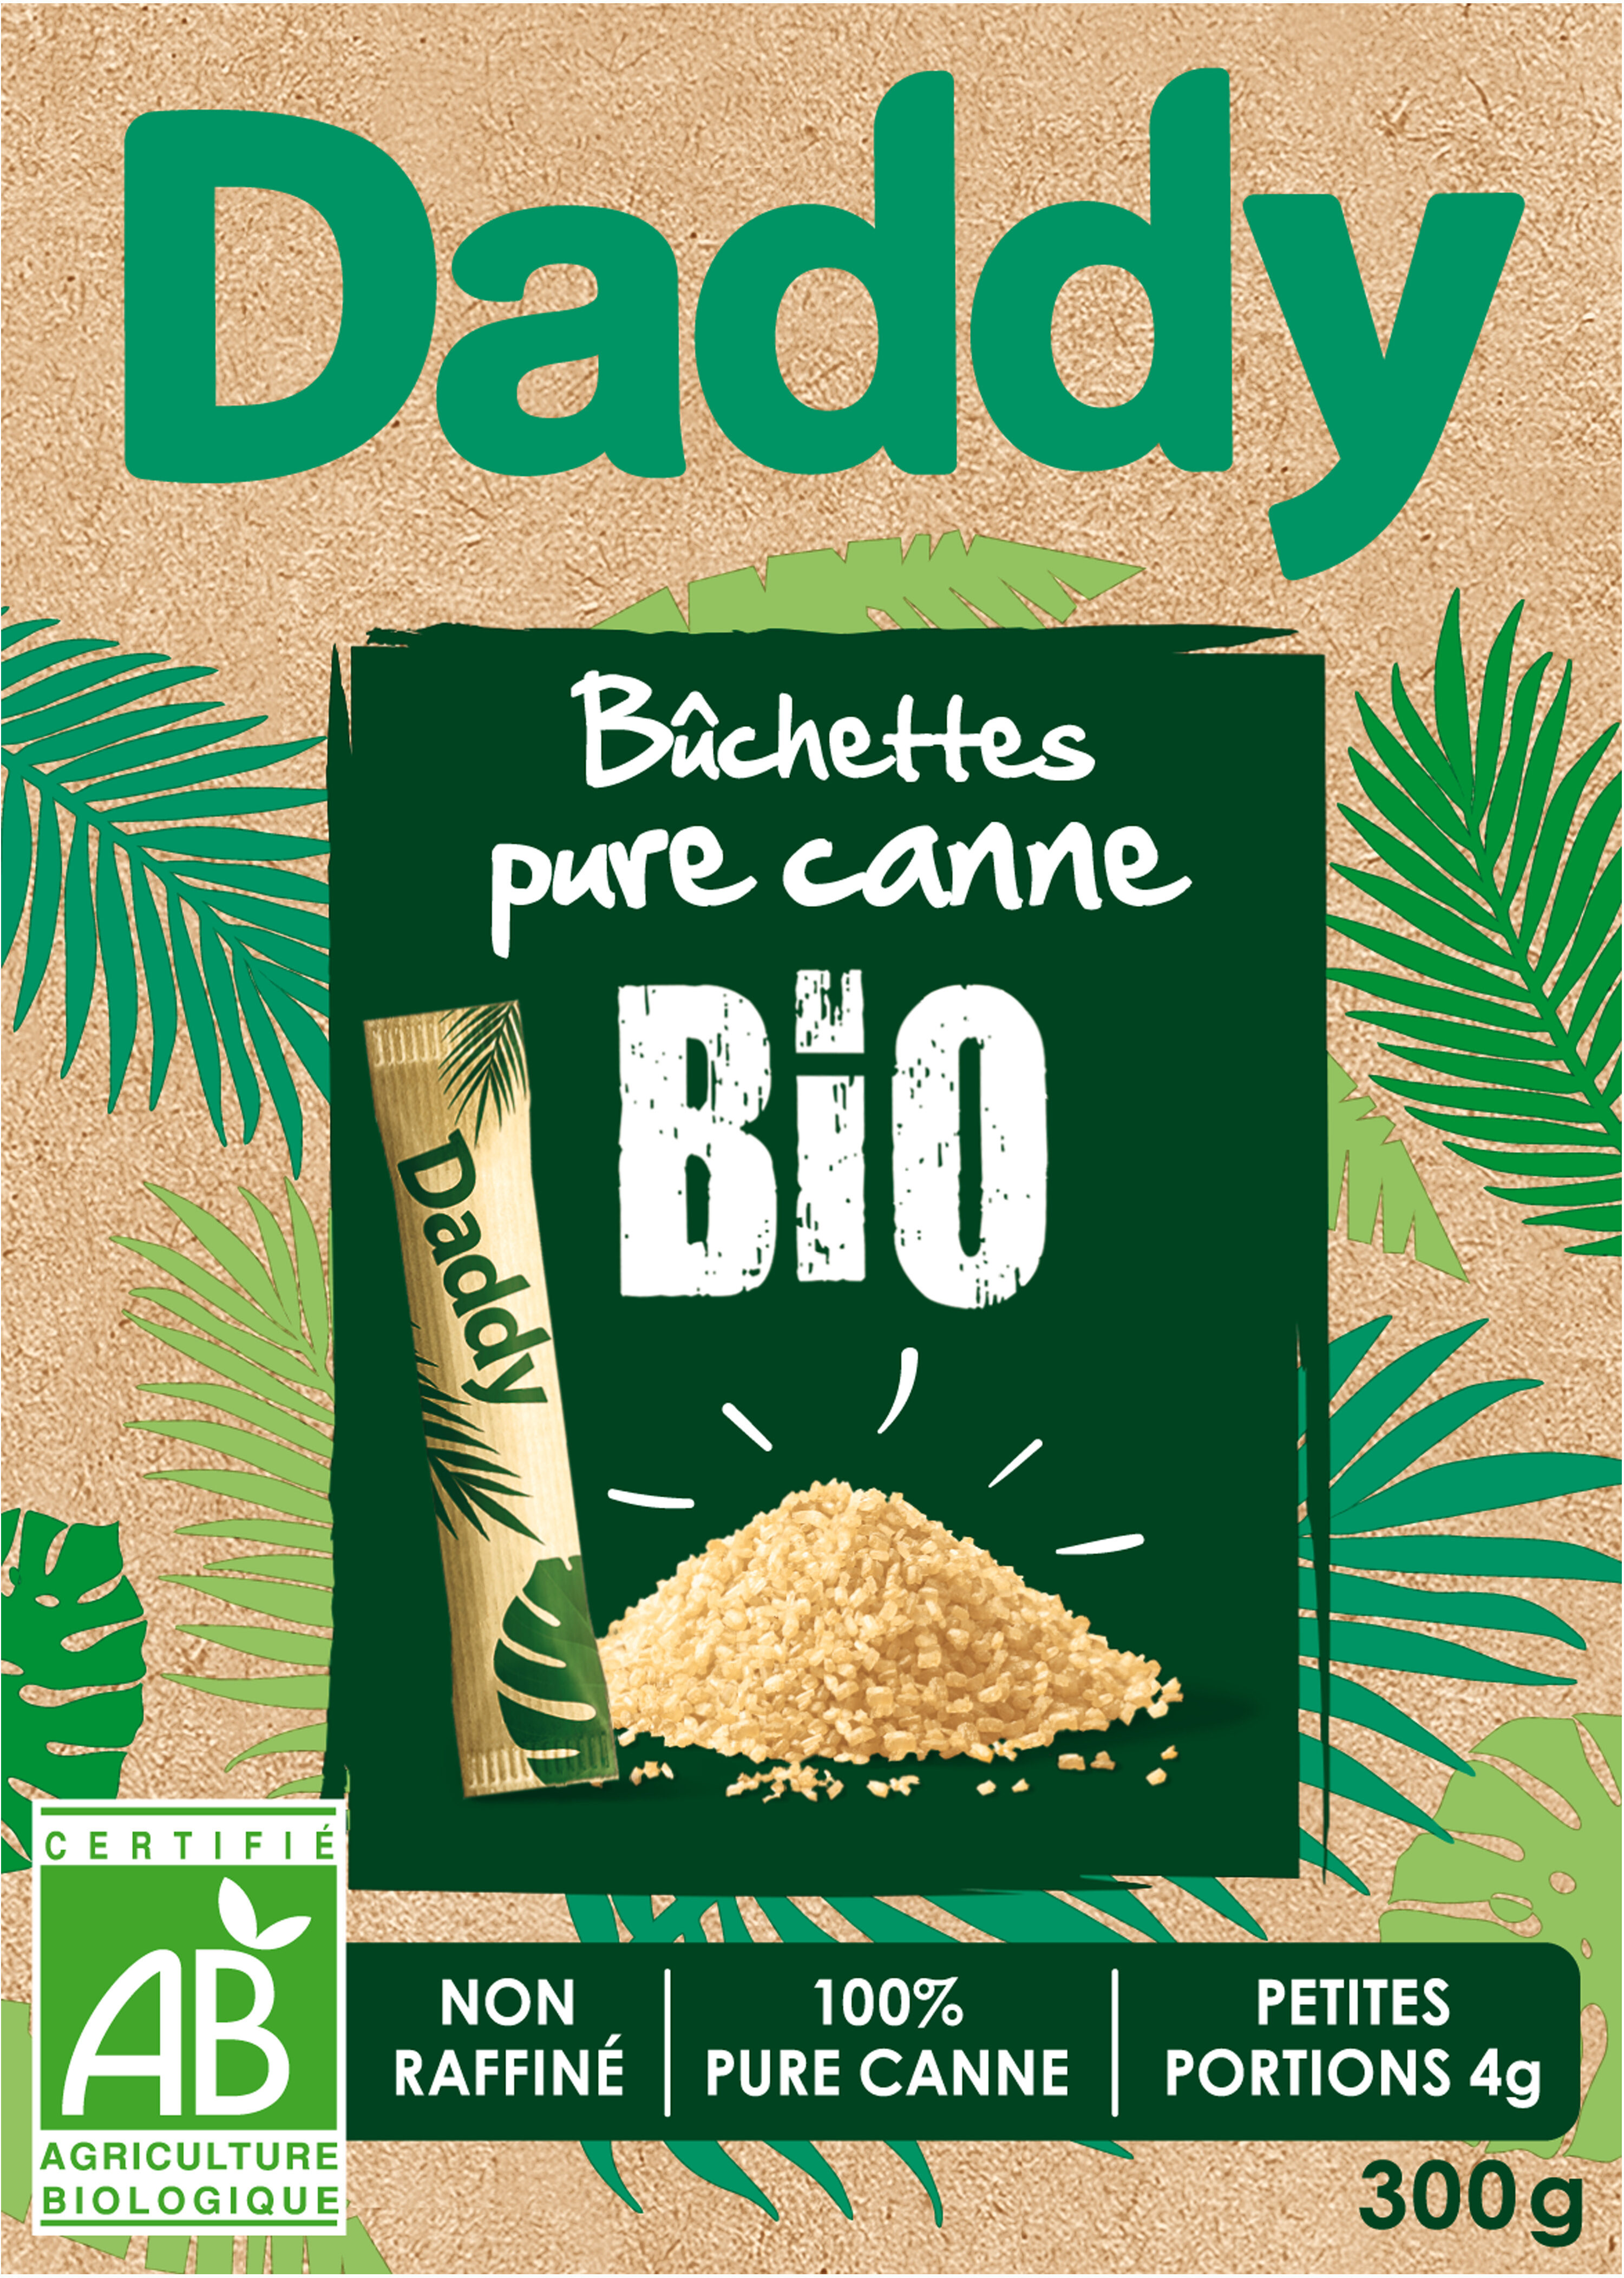 Boite de bûchettes 4g canne blond bio daddy 300g - Product - fr